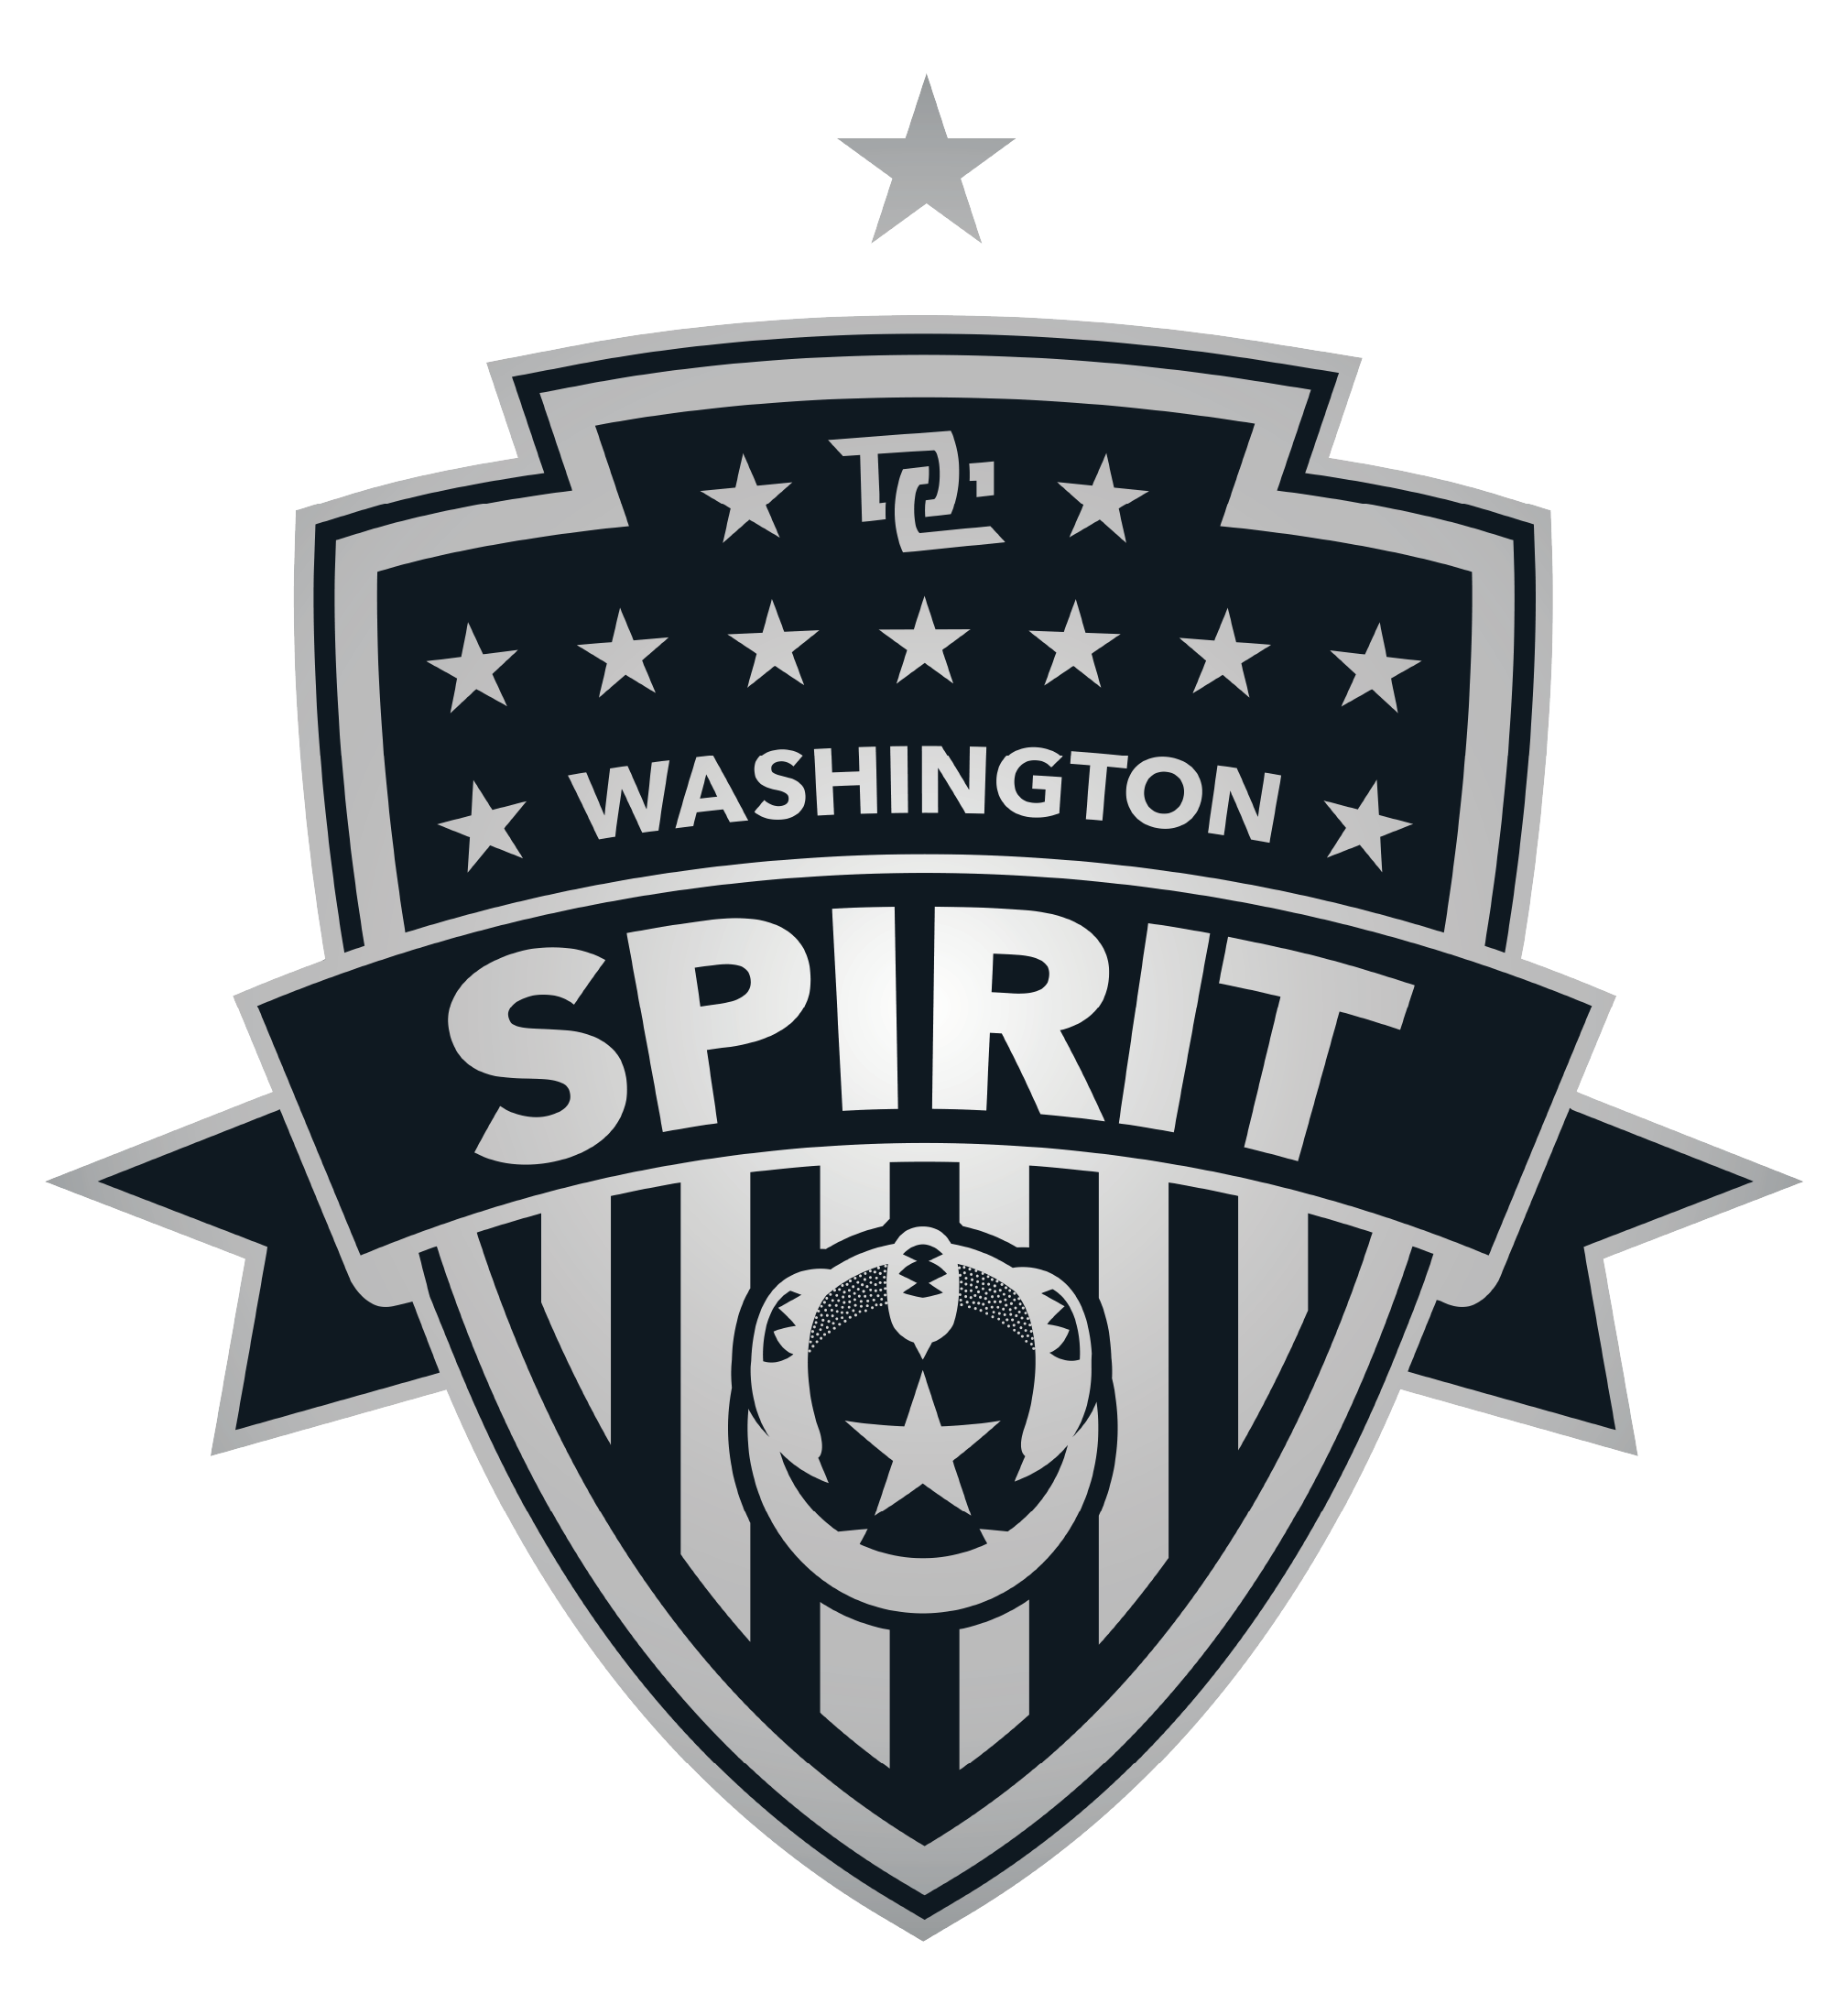 Washington Spirit badge